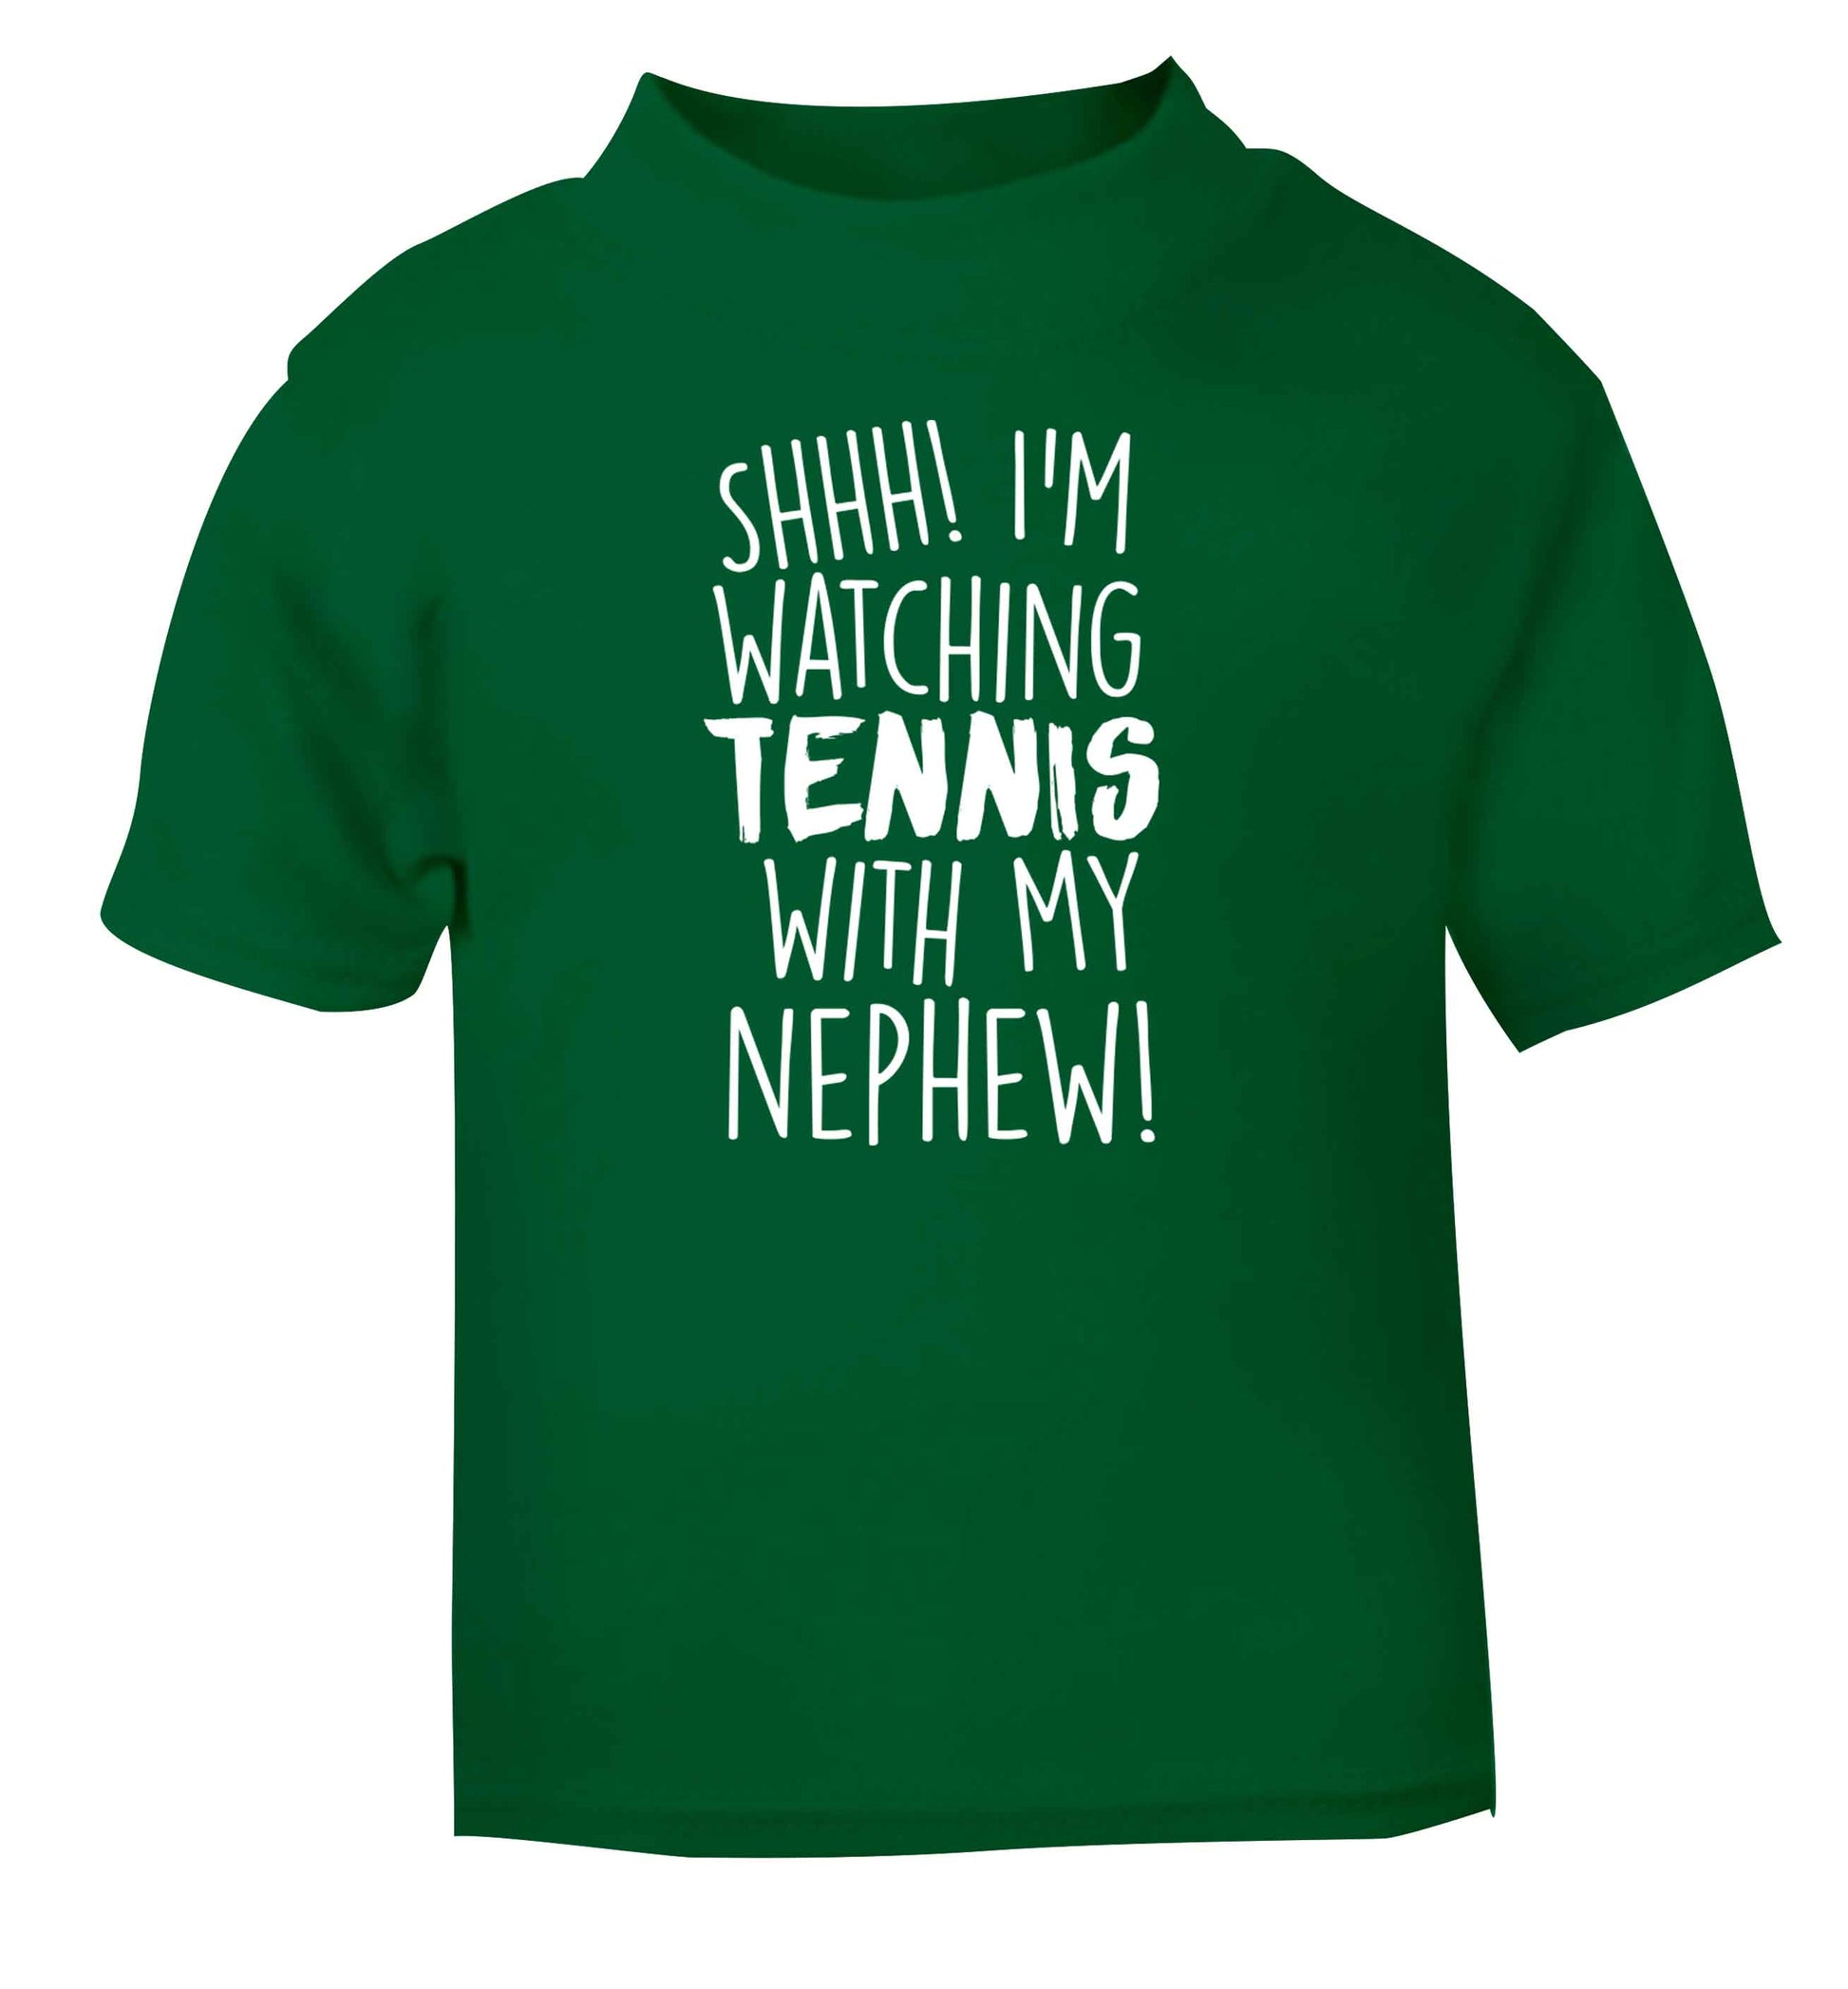 Shh! I'm watching tennis with my nephew! green Baby Toddler Tshirt 2 Years